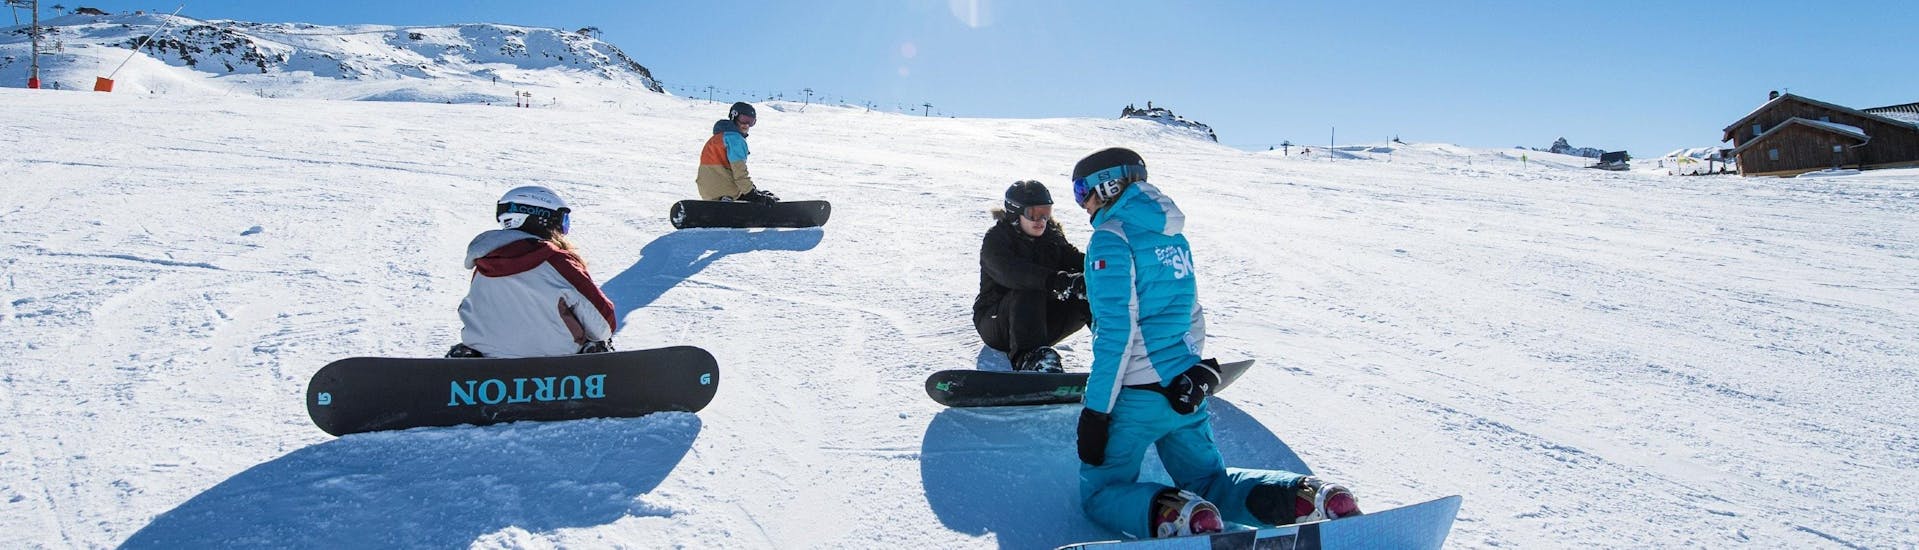 Lezioni di Snowboard a partire da 15 anni per tutti i livelli.